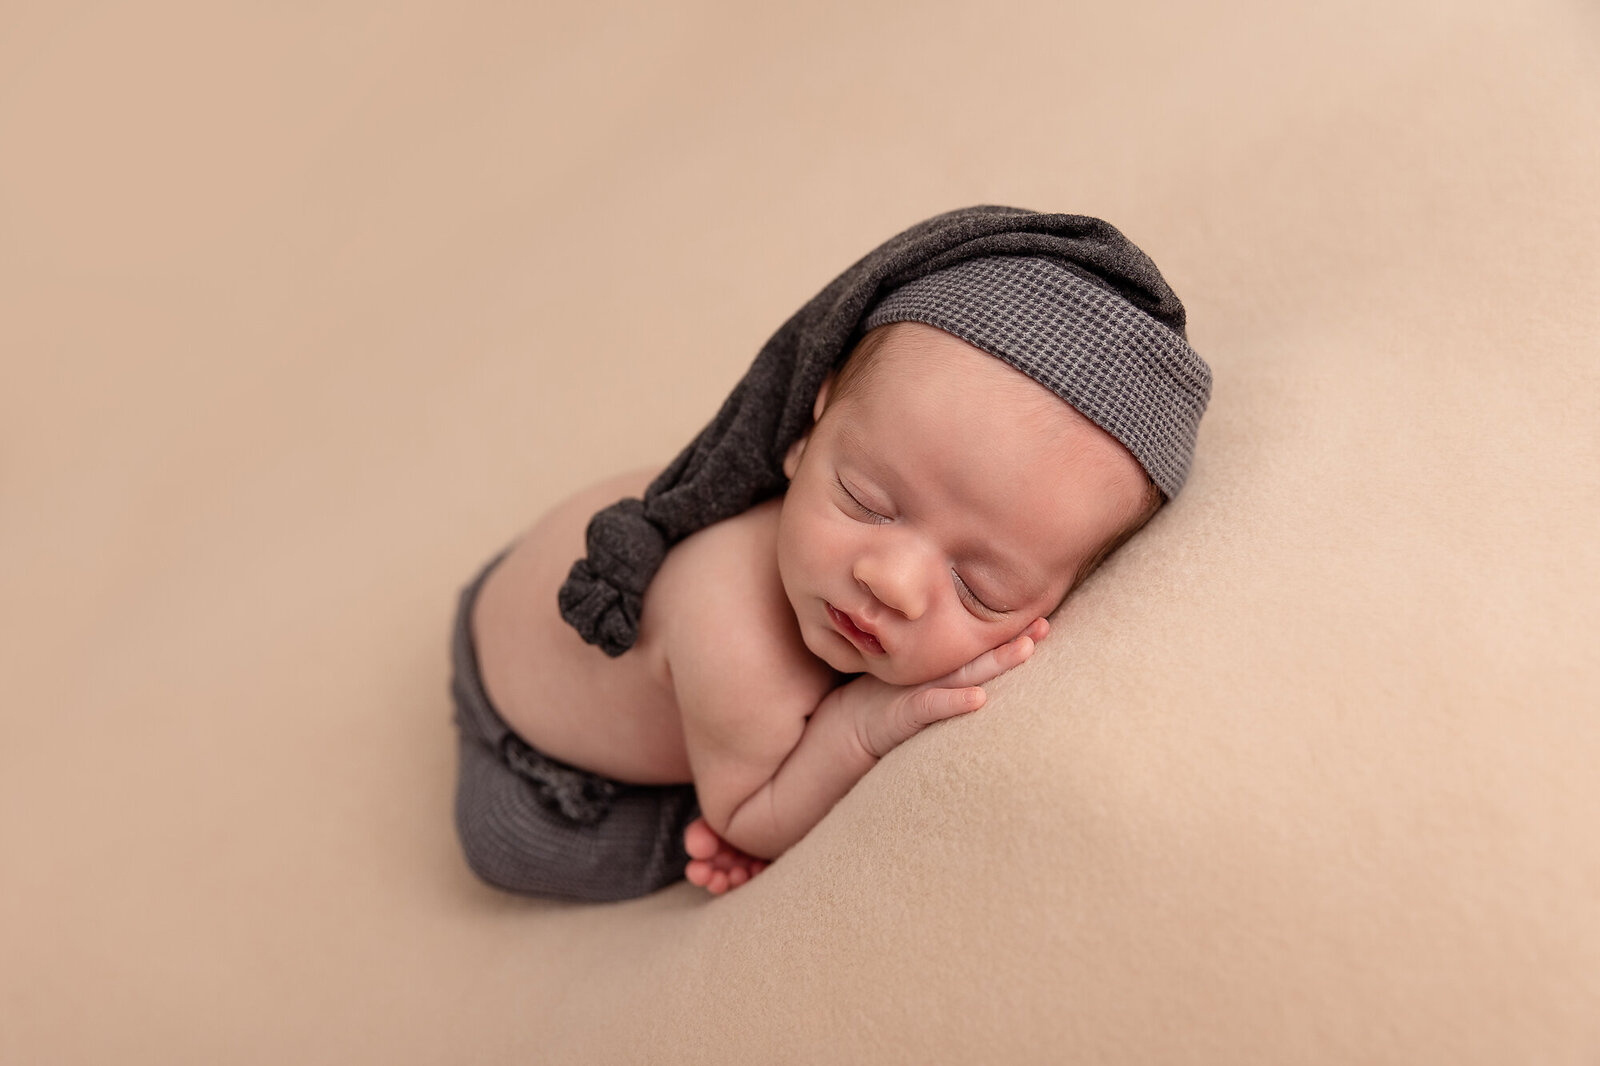 baby sleeping wearing hat and pants by Newborn Photography Bucks County PA